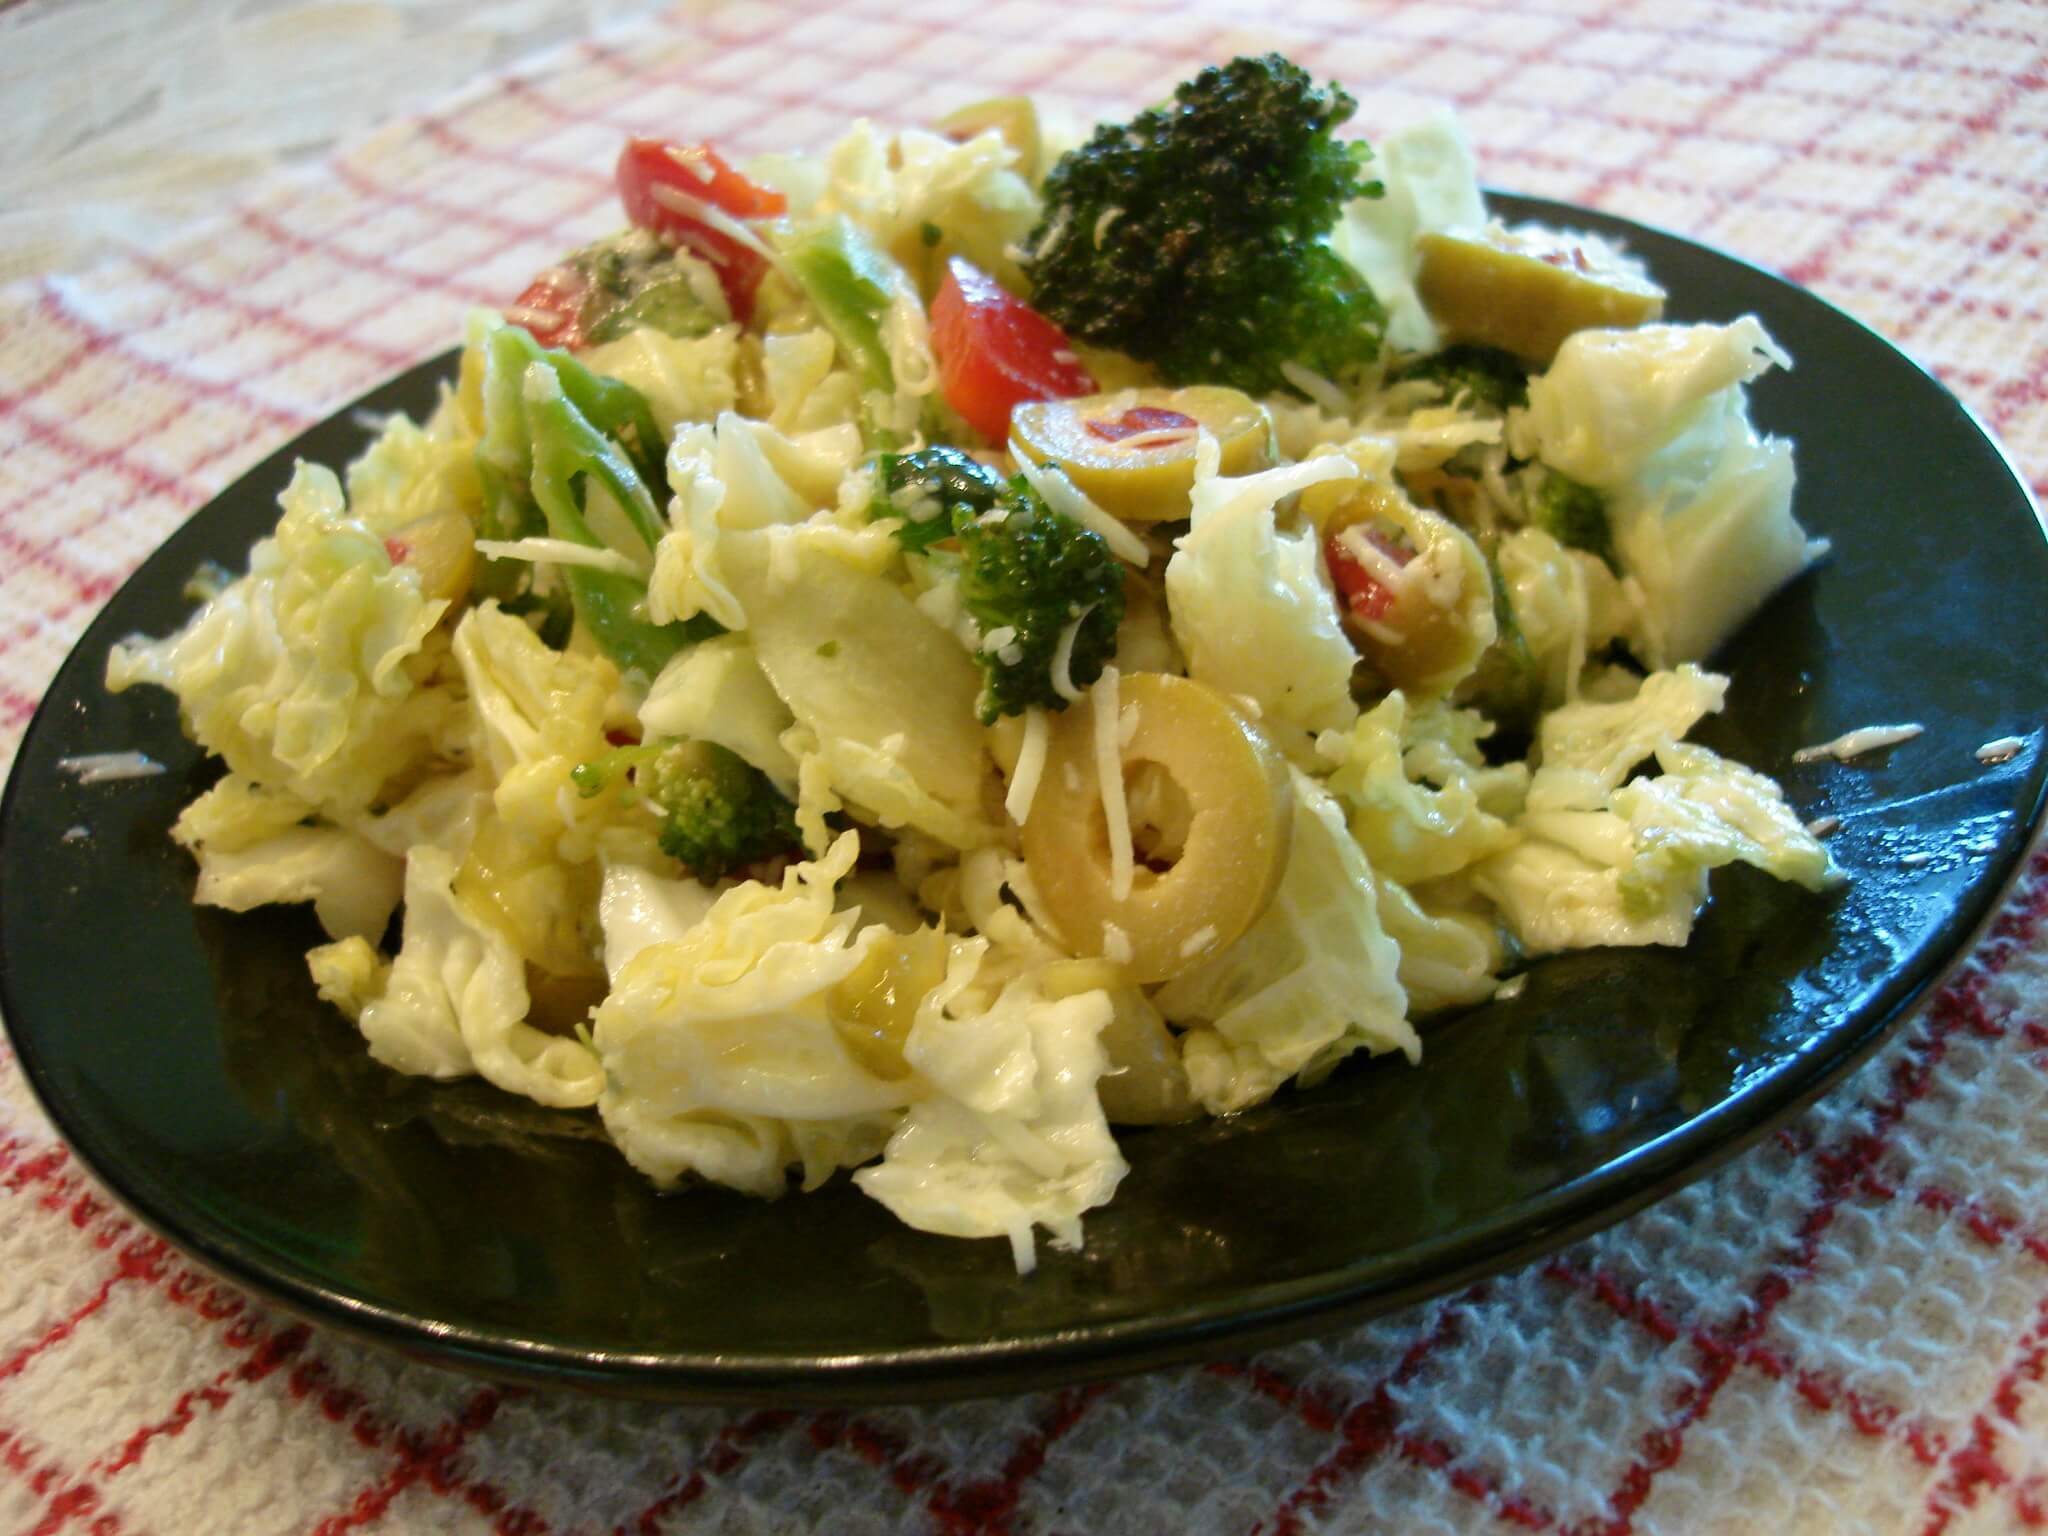 Lunch salad with KC's Vinaigrette